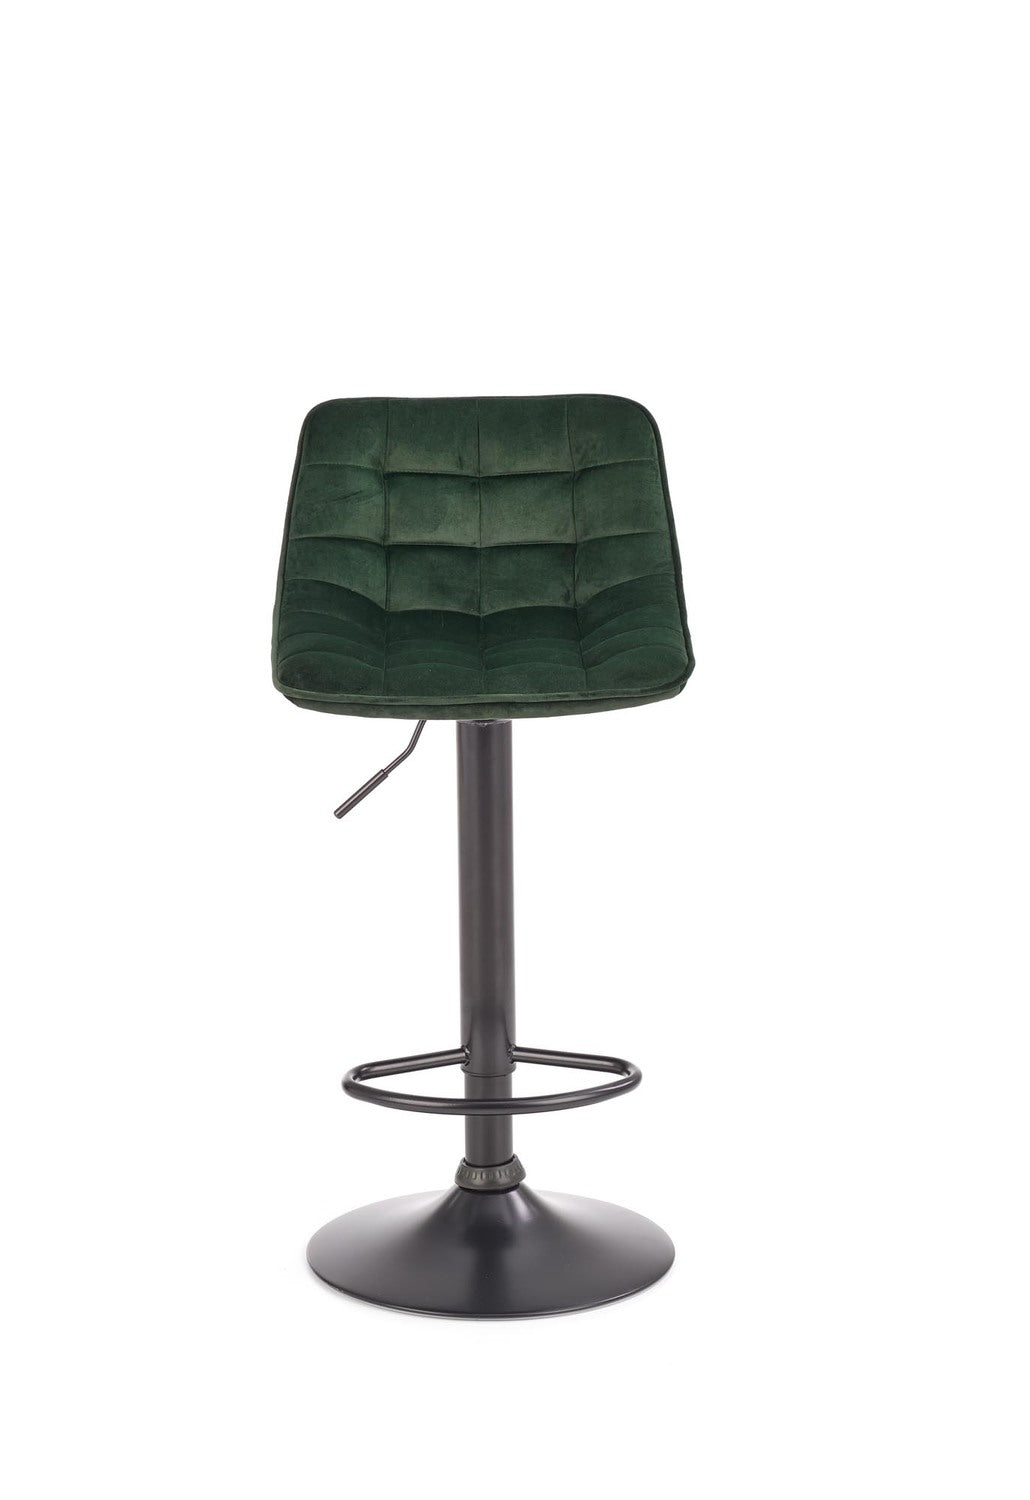 NW krēsls tumši zaļs 43/44/84-106/62-84 cm - N1 Home